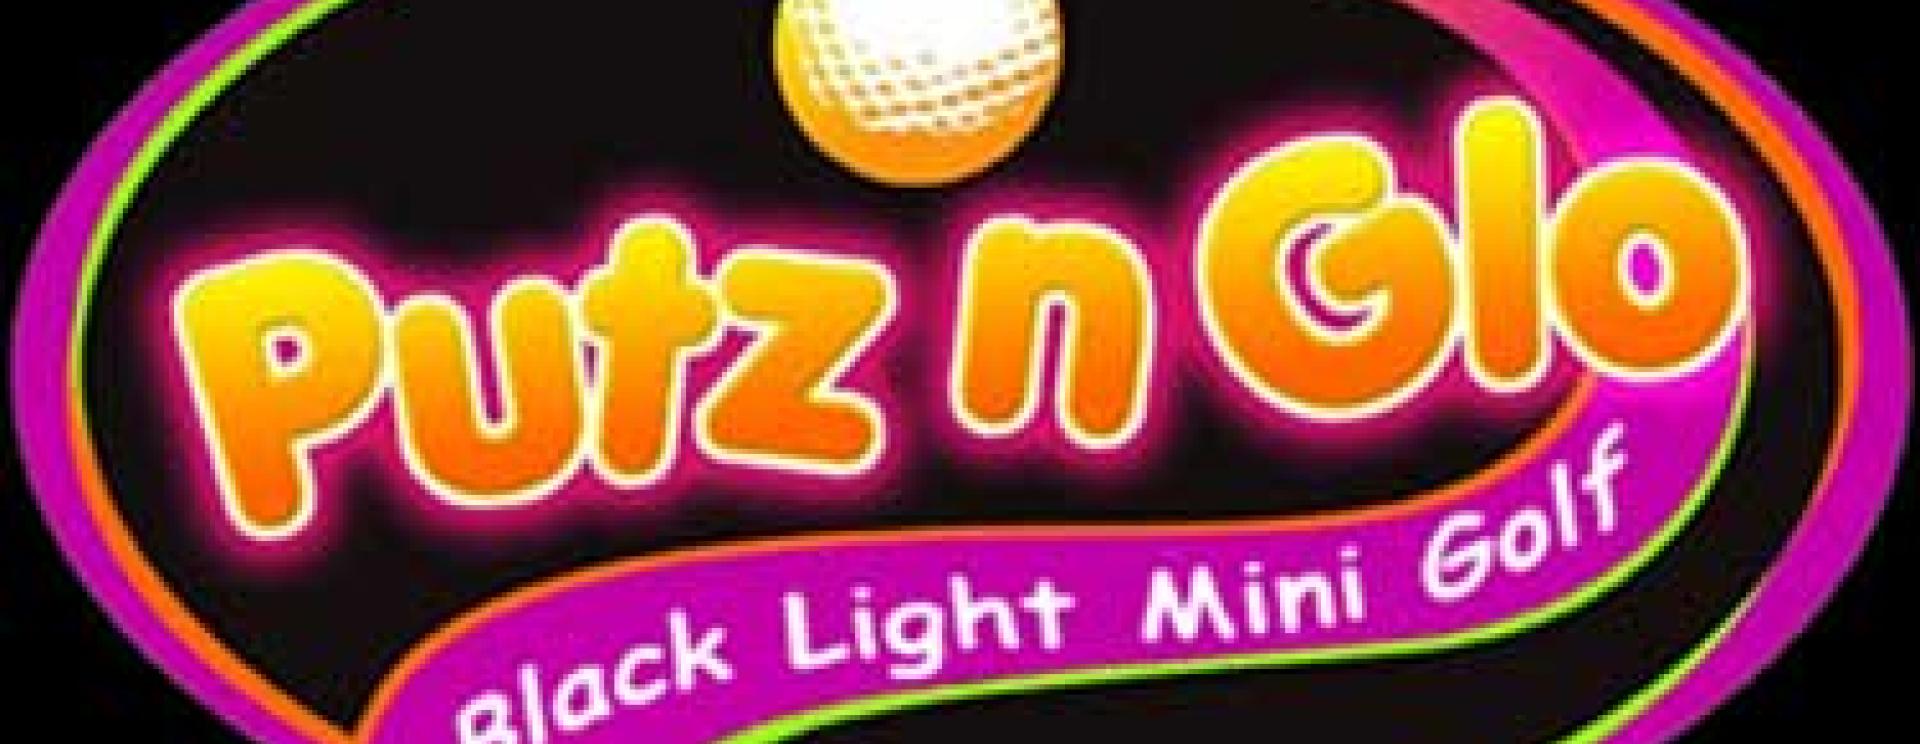 Putz n Glo Black Light Miniature Golf